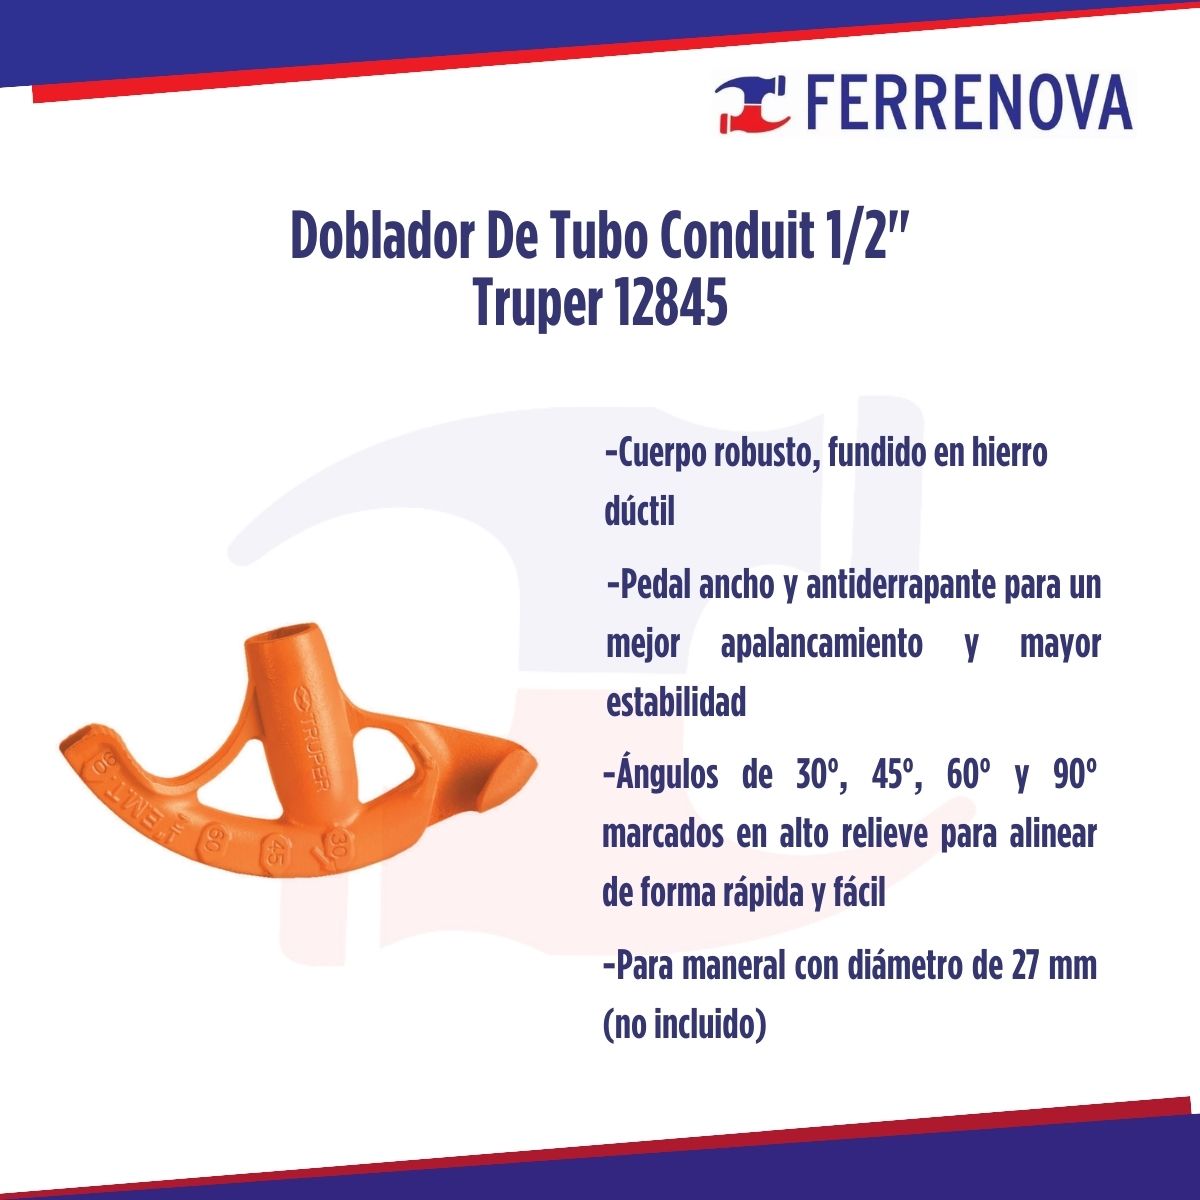 Doblador De Tubo Conduit 1/2" Truper 12845